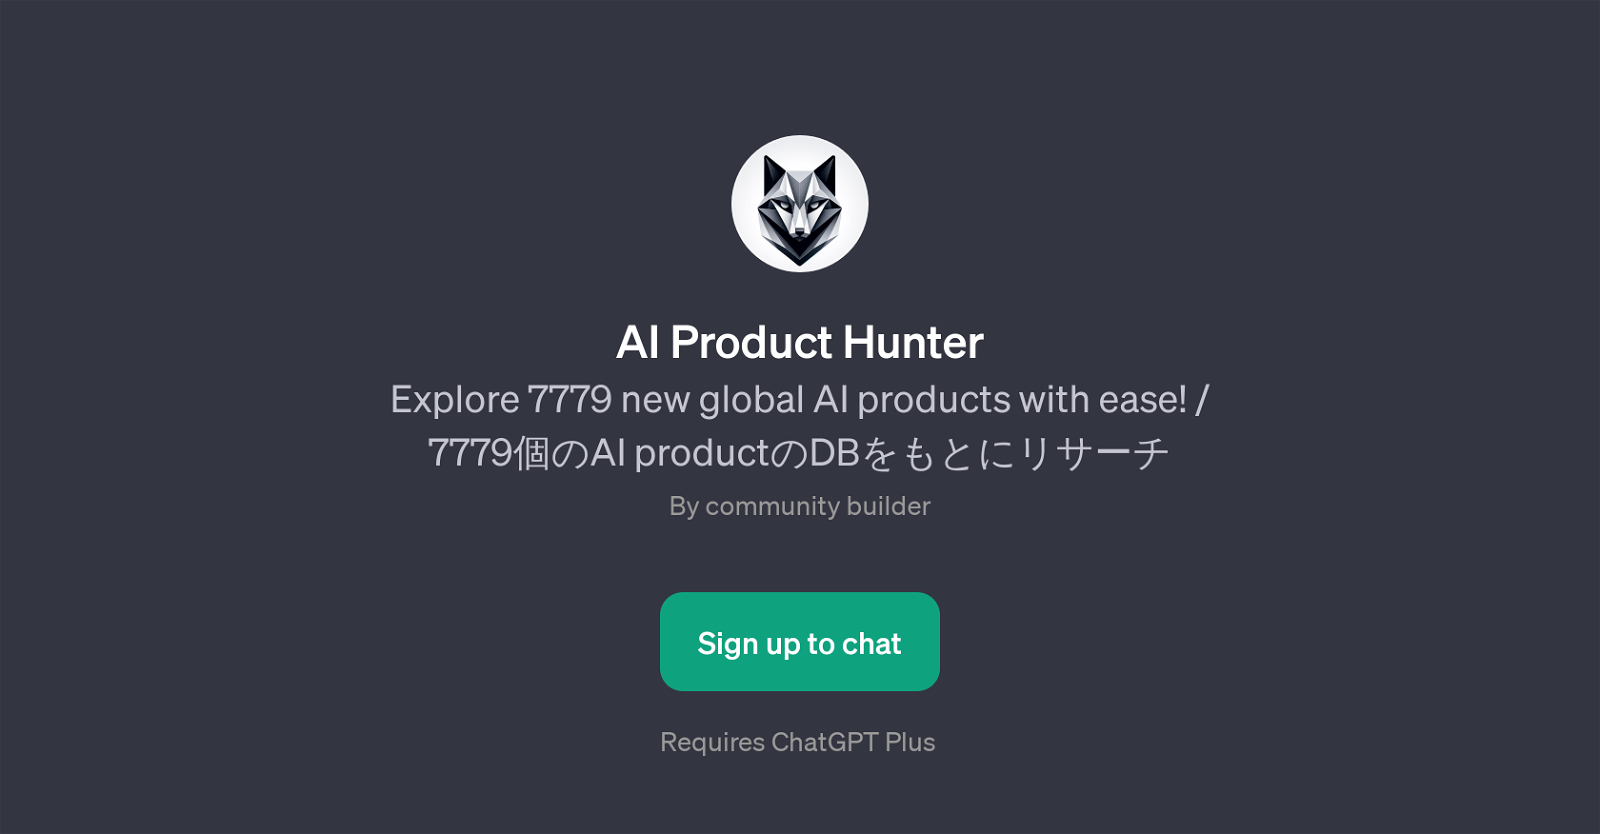 AI Product Hunter website